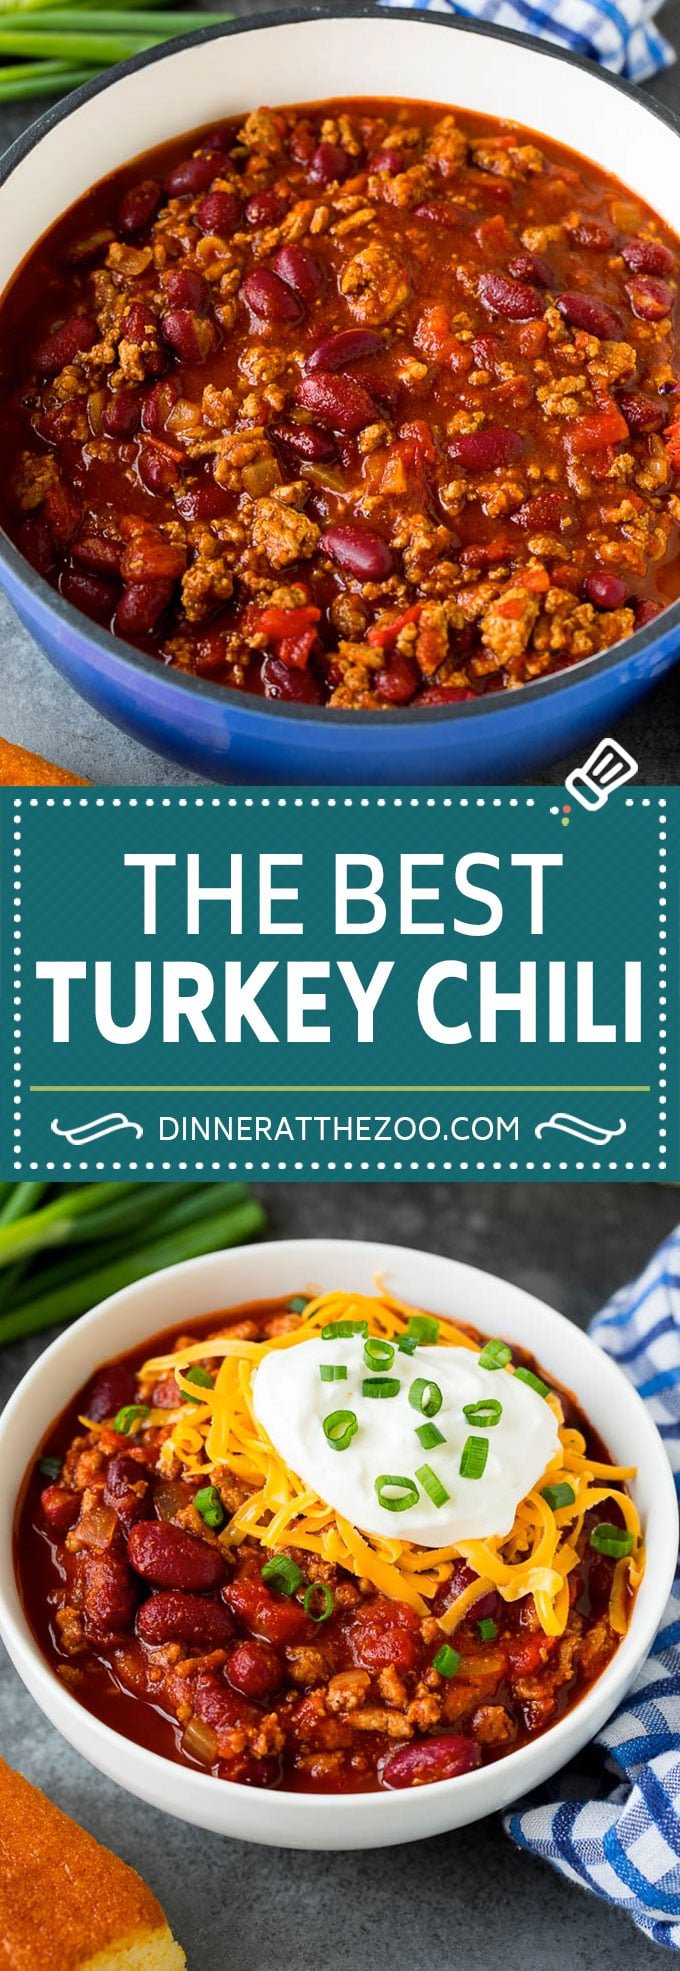 Turkey Chili Recipe #turkey #chili #dinner #dinneratthezoo